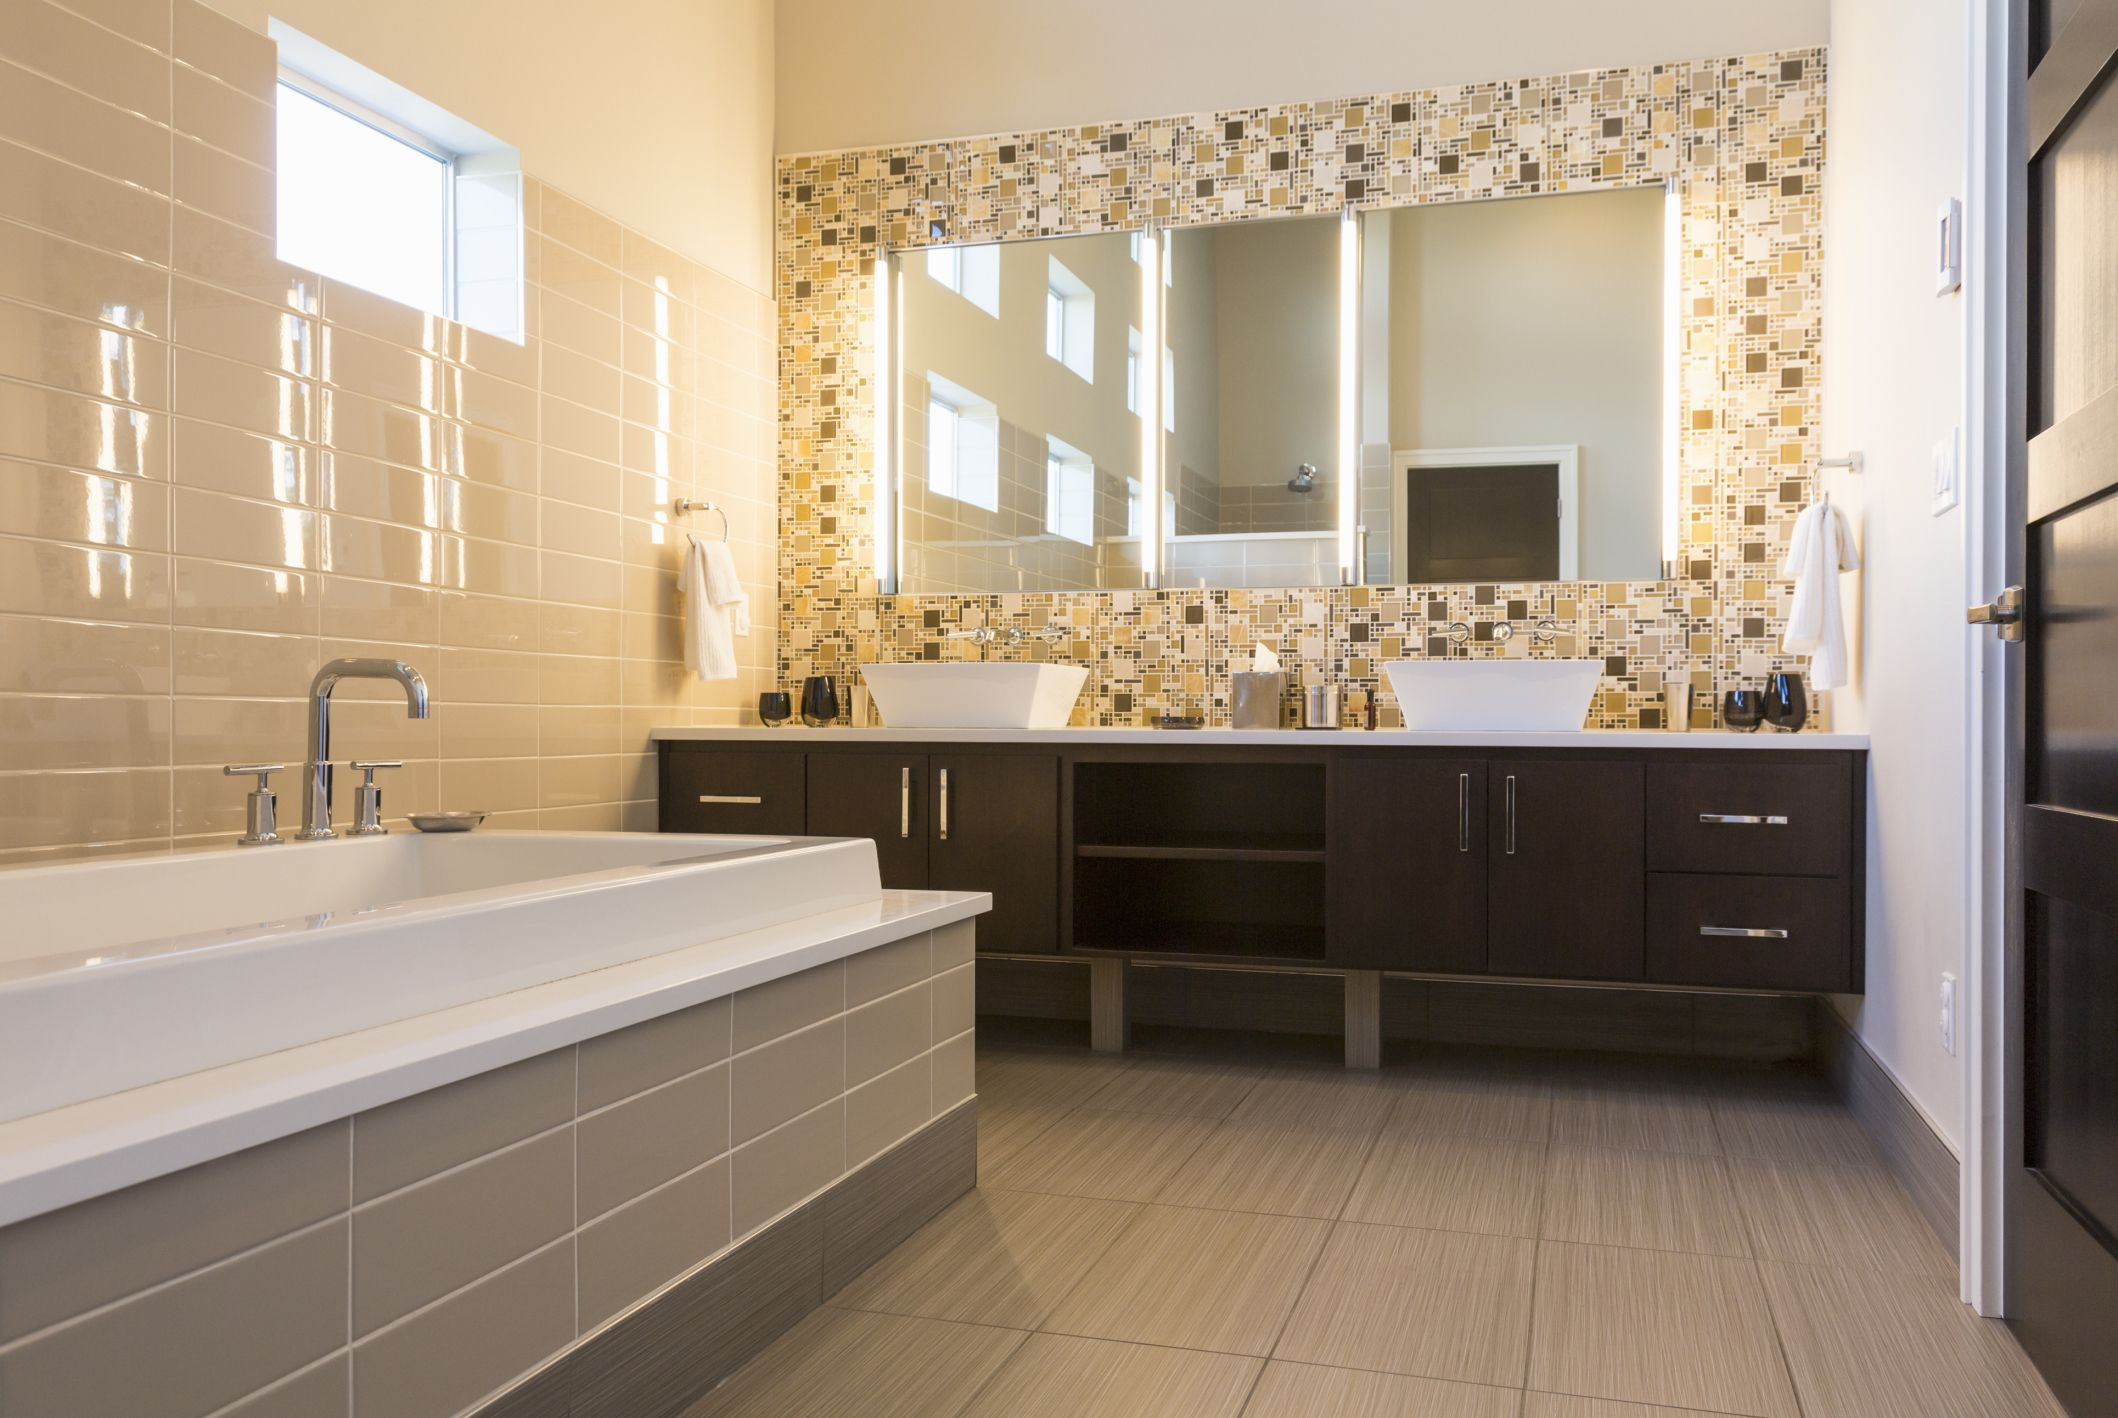 Design Your Bathroom
 Bathroom Design Ideas For Your Own Home